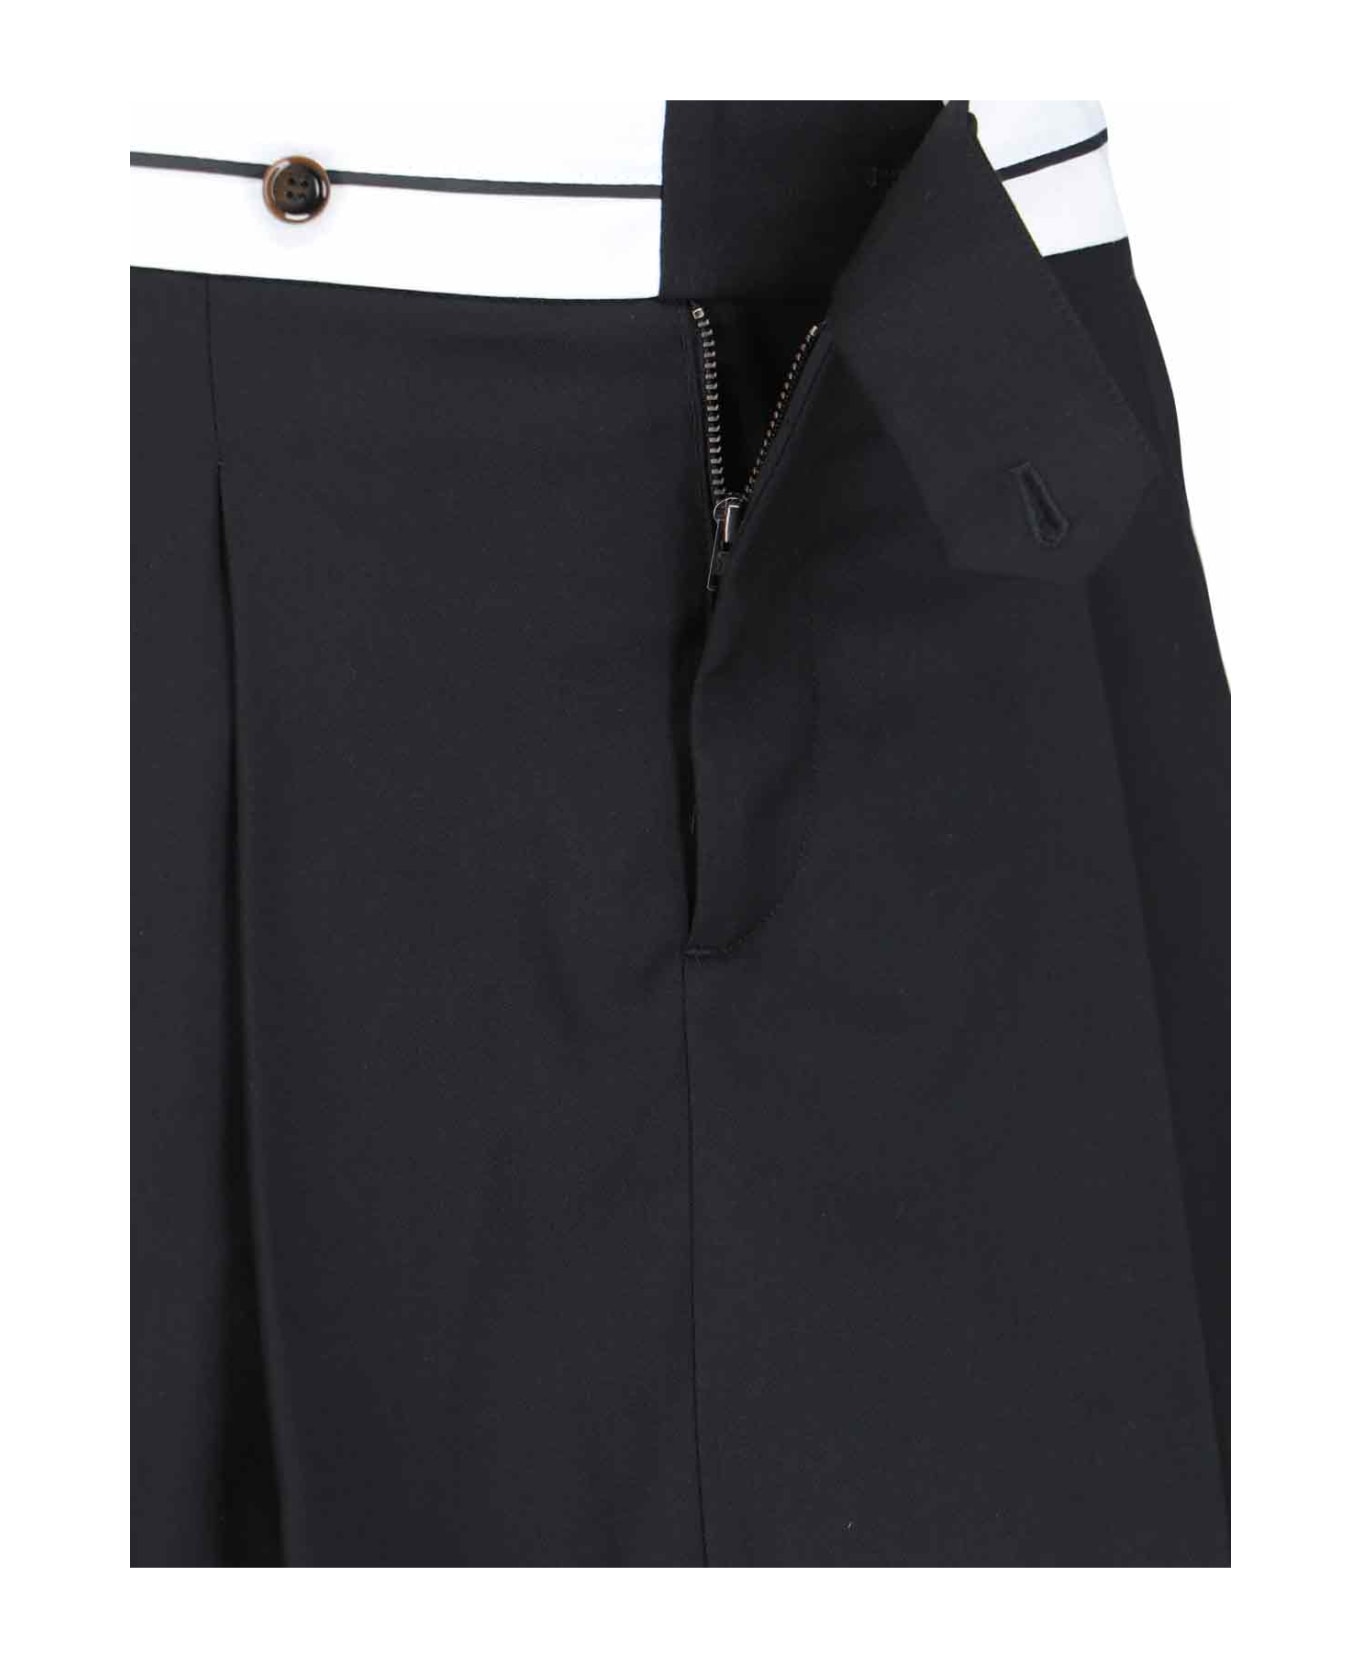 The Garment Mini Skirt "pluto" - Black  